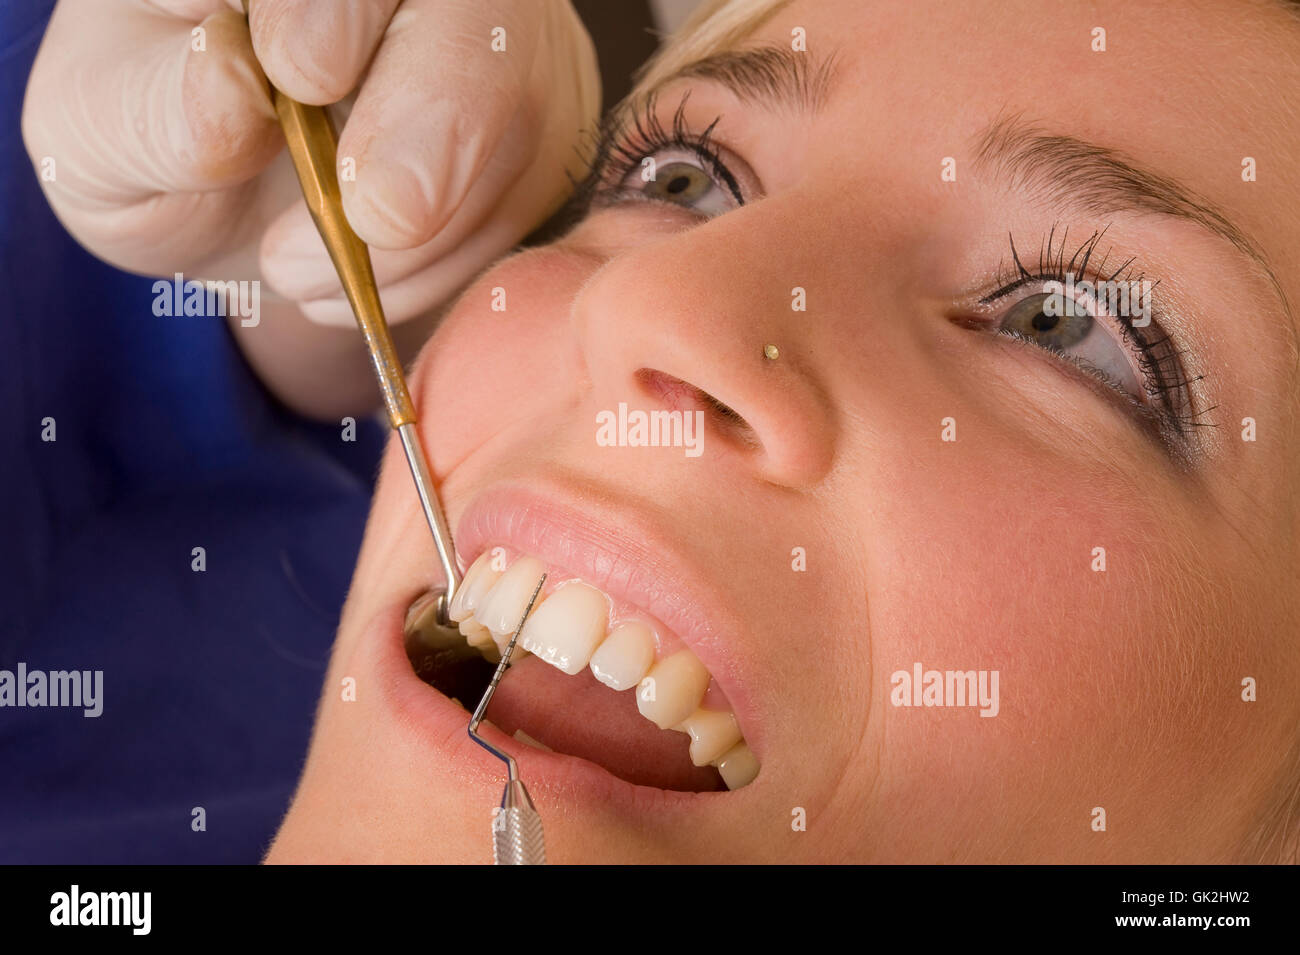 dentist Stock Photo